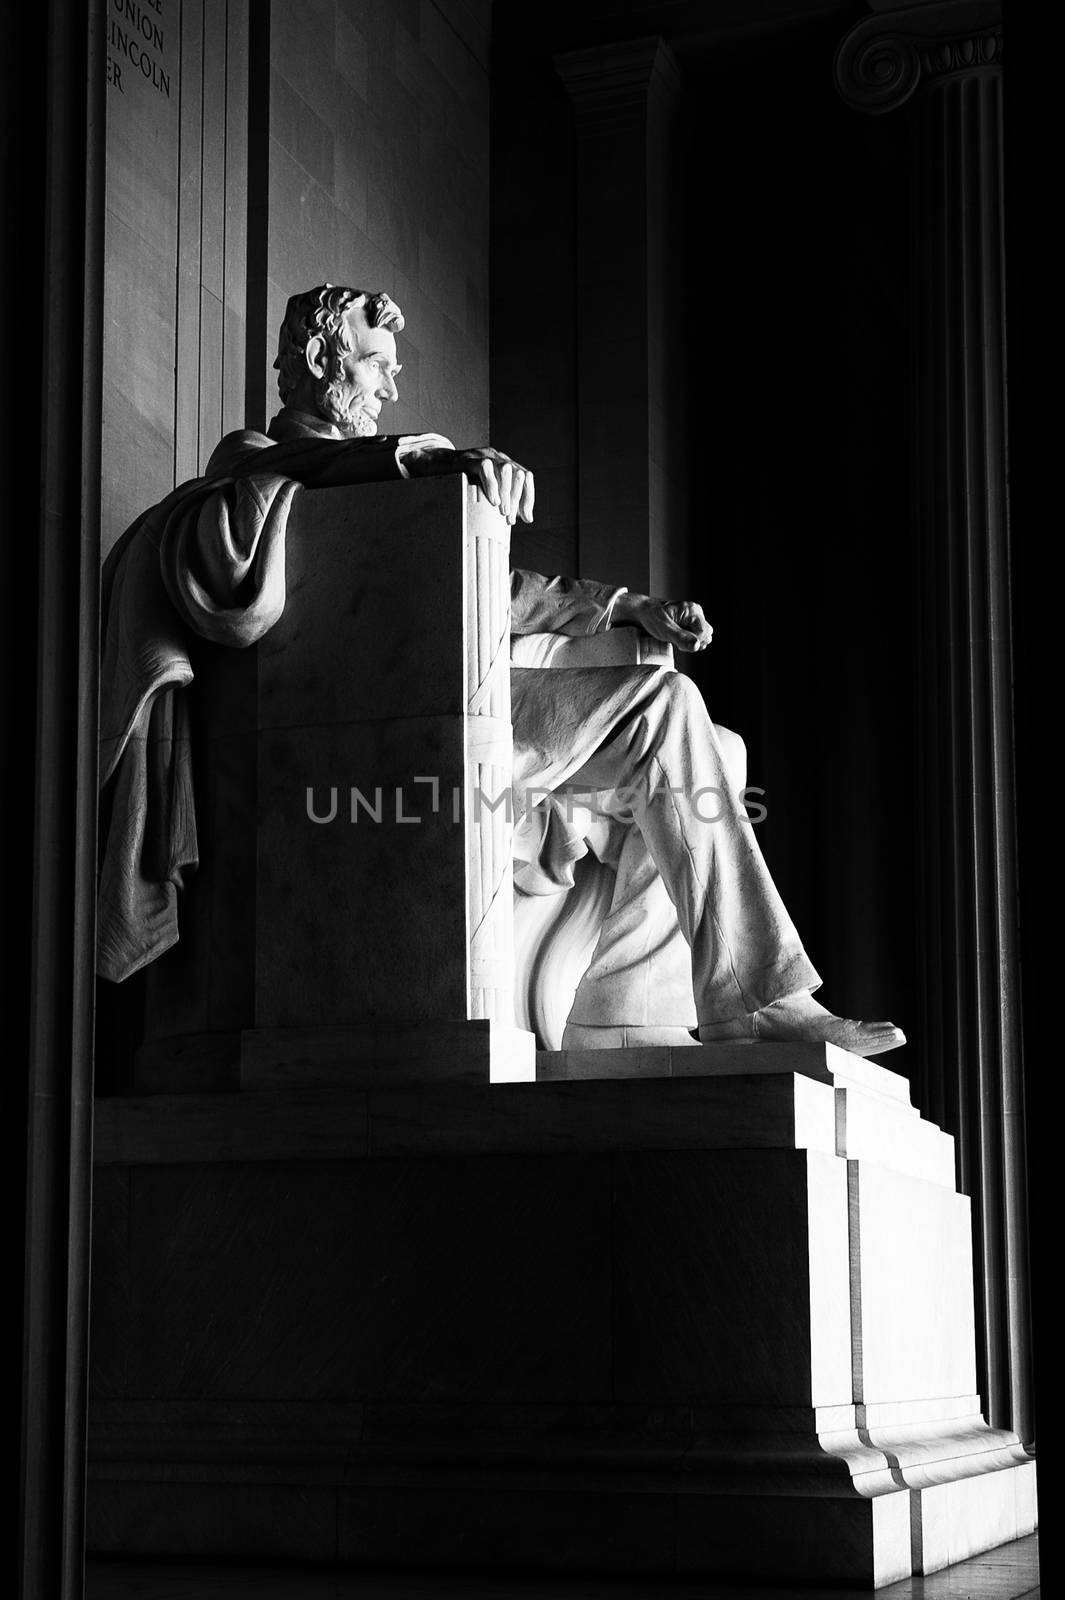 Abraham Lincoln statue in Lincoln Memorial building, Washington, D.C, U.S.A.